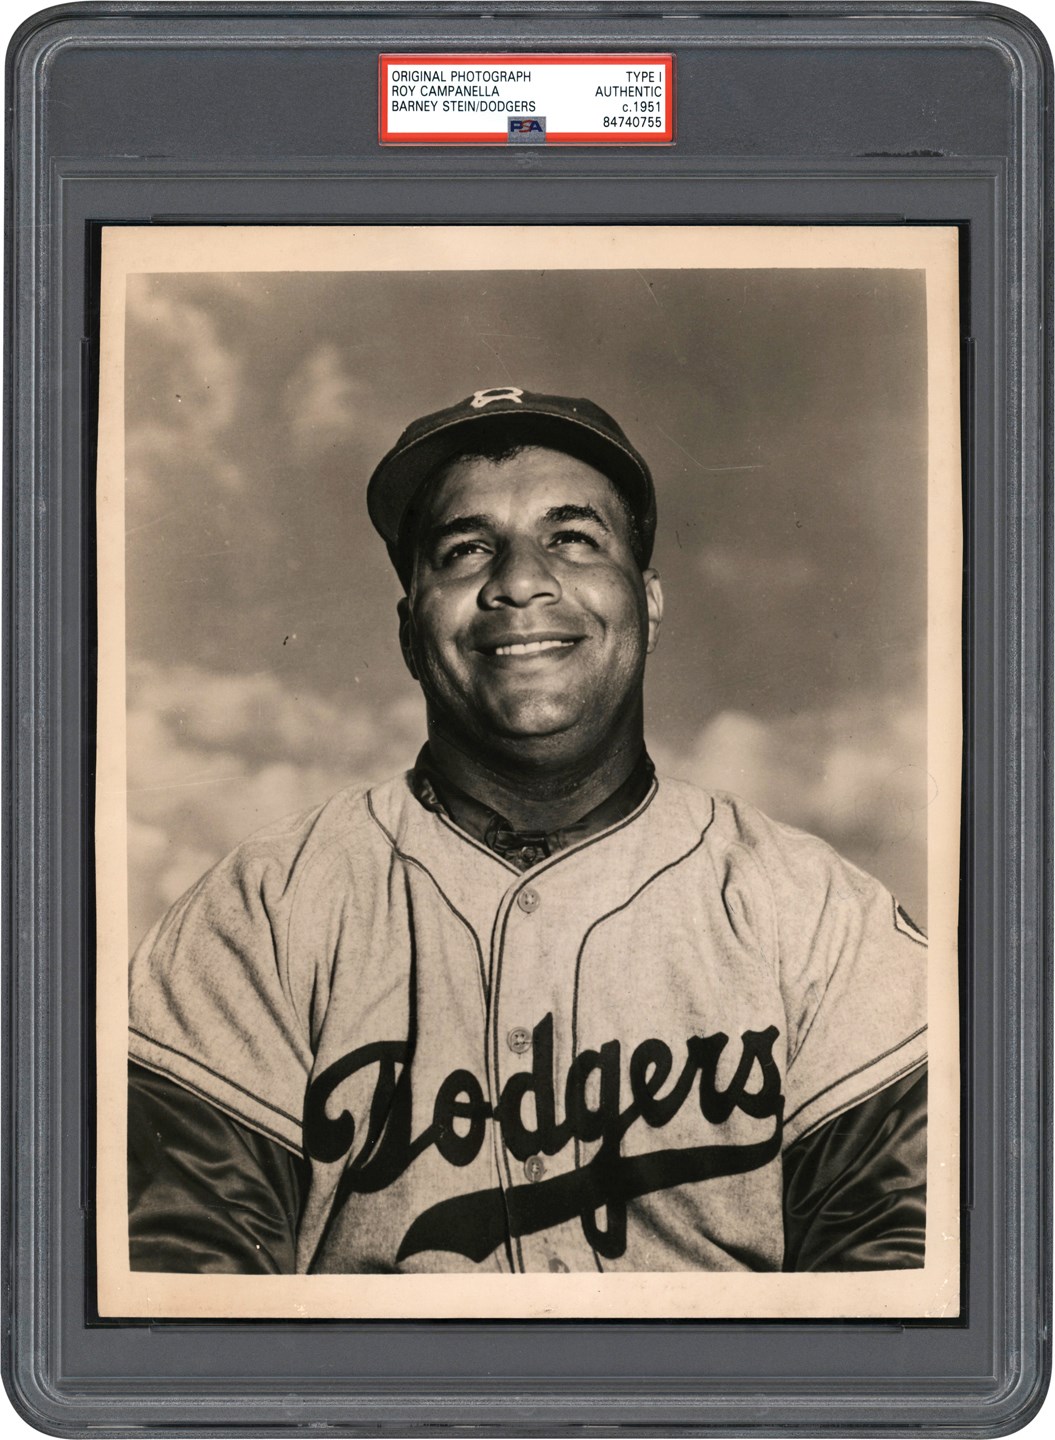 1951 Roy Campanella Brooklyn Dodgers Photograph (PSA Type I)